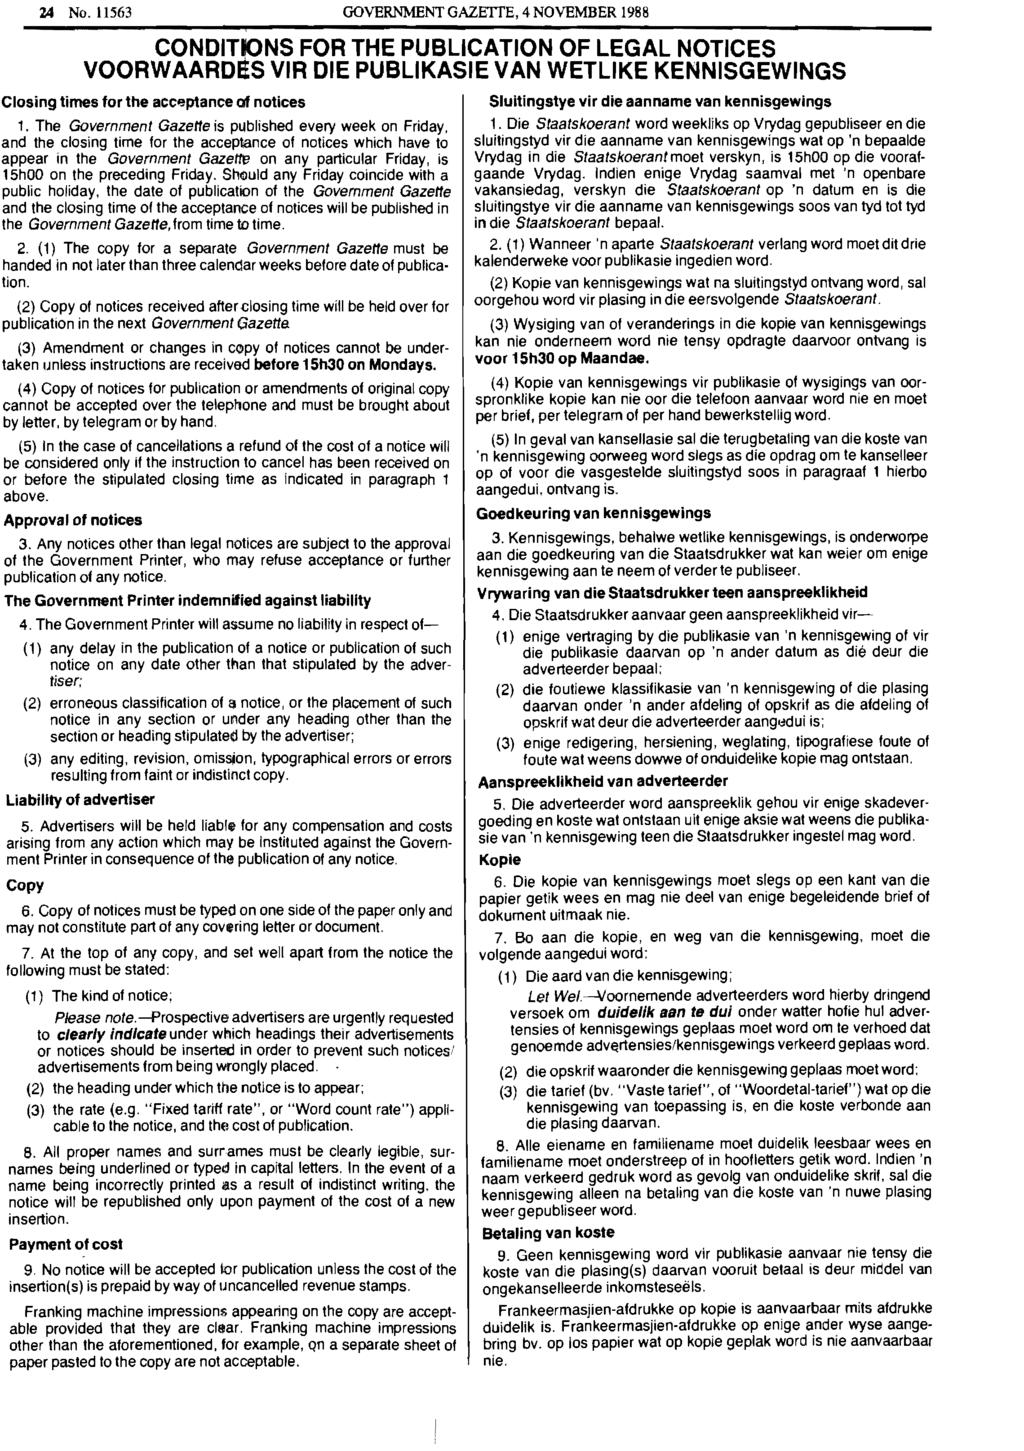 24 No. 11563 GOVERNMENT GAZETTE, 4 NOVEMBER 1988 CONDIT~NS FOR THE PUBLICATION OF LEGAL NOTICES VOORWAARDIiS VIR DIE PUBLIKASIE VAN WETLIKE KENNISGEWINGS Closing times for the acceptance of notices 1.